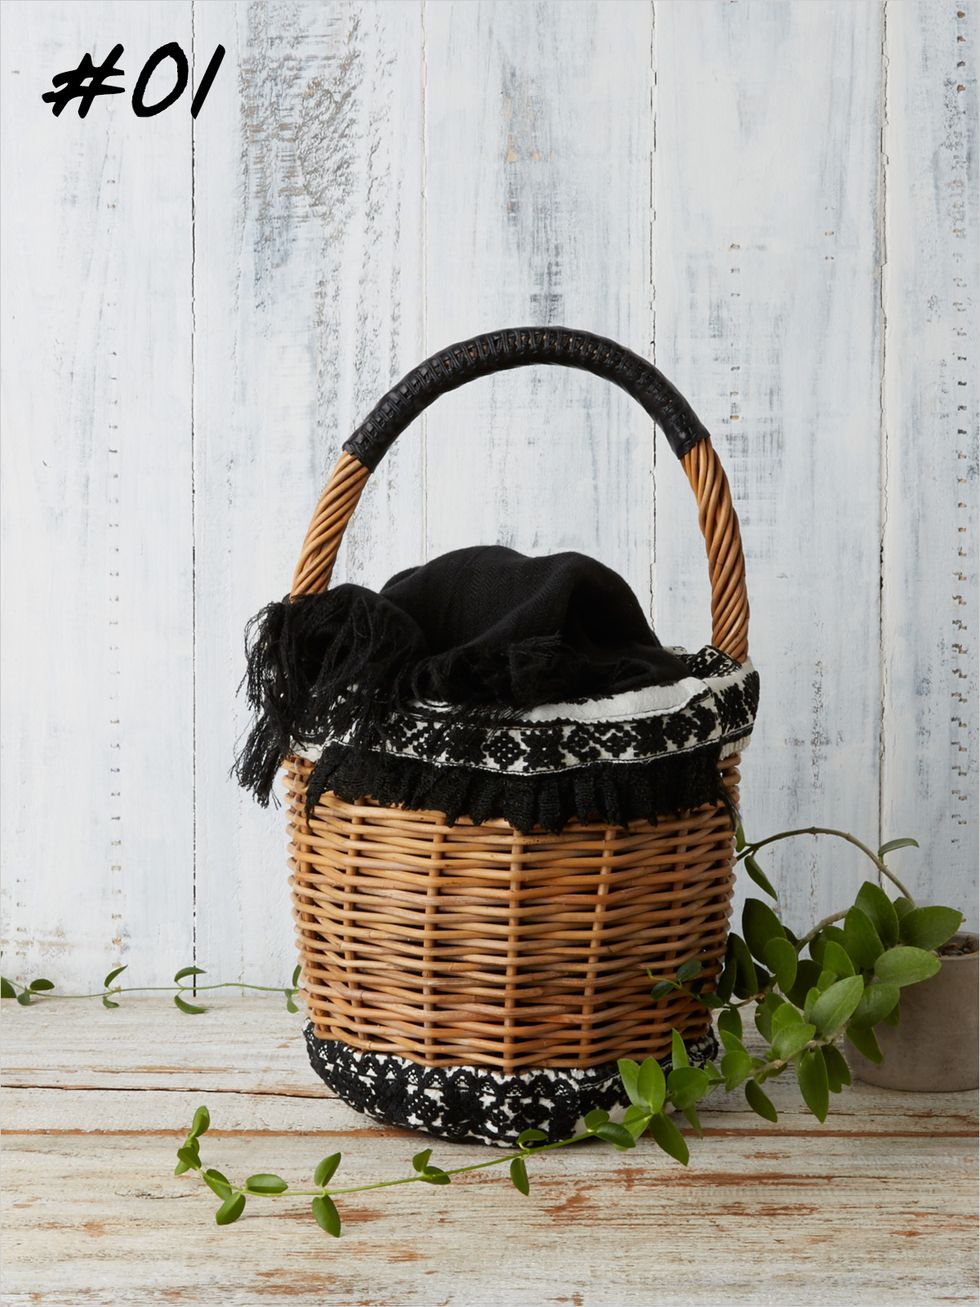 Basket, Storage basket, Wicker, Picnic basket, Home accessories, Flower girl basket, Still life photography, Straw, Rope, 